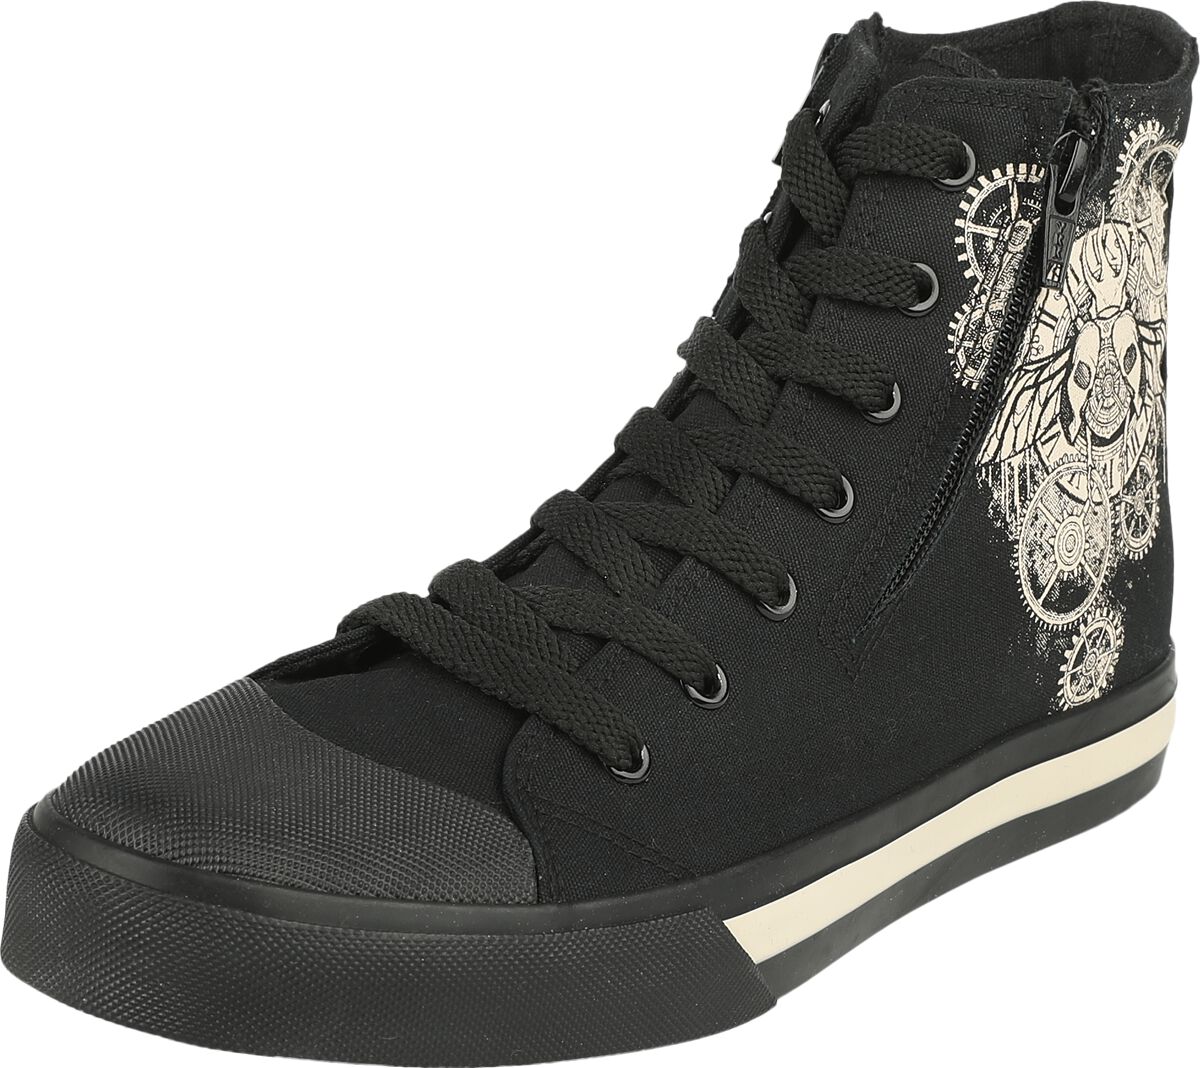 Gothicana by EMP - Gothic Sneaker high - Sneaker with Industrial Beetle Print - EU37 bis EU46 - Größe EU45 - schwarz